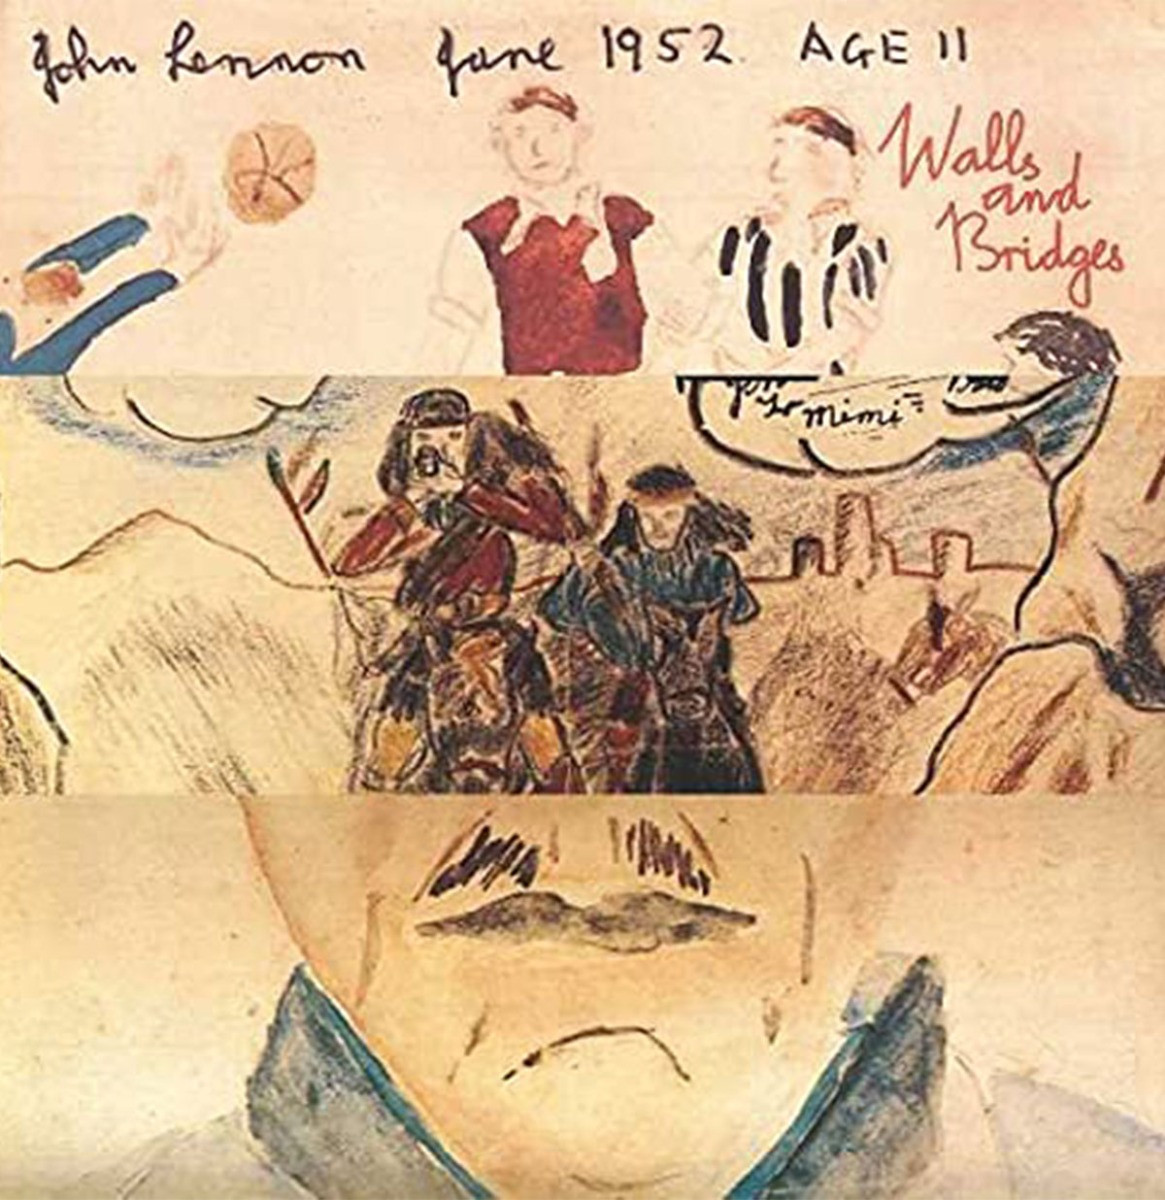 John Lennon - Walls And Bridges LP